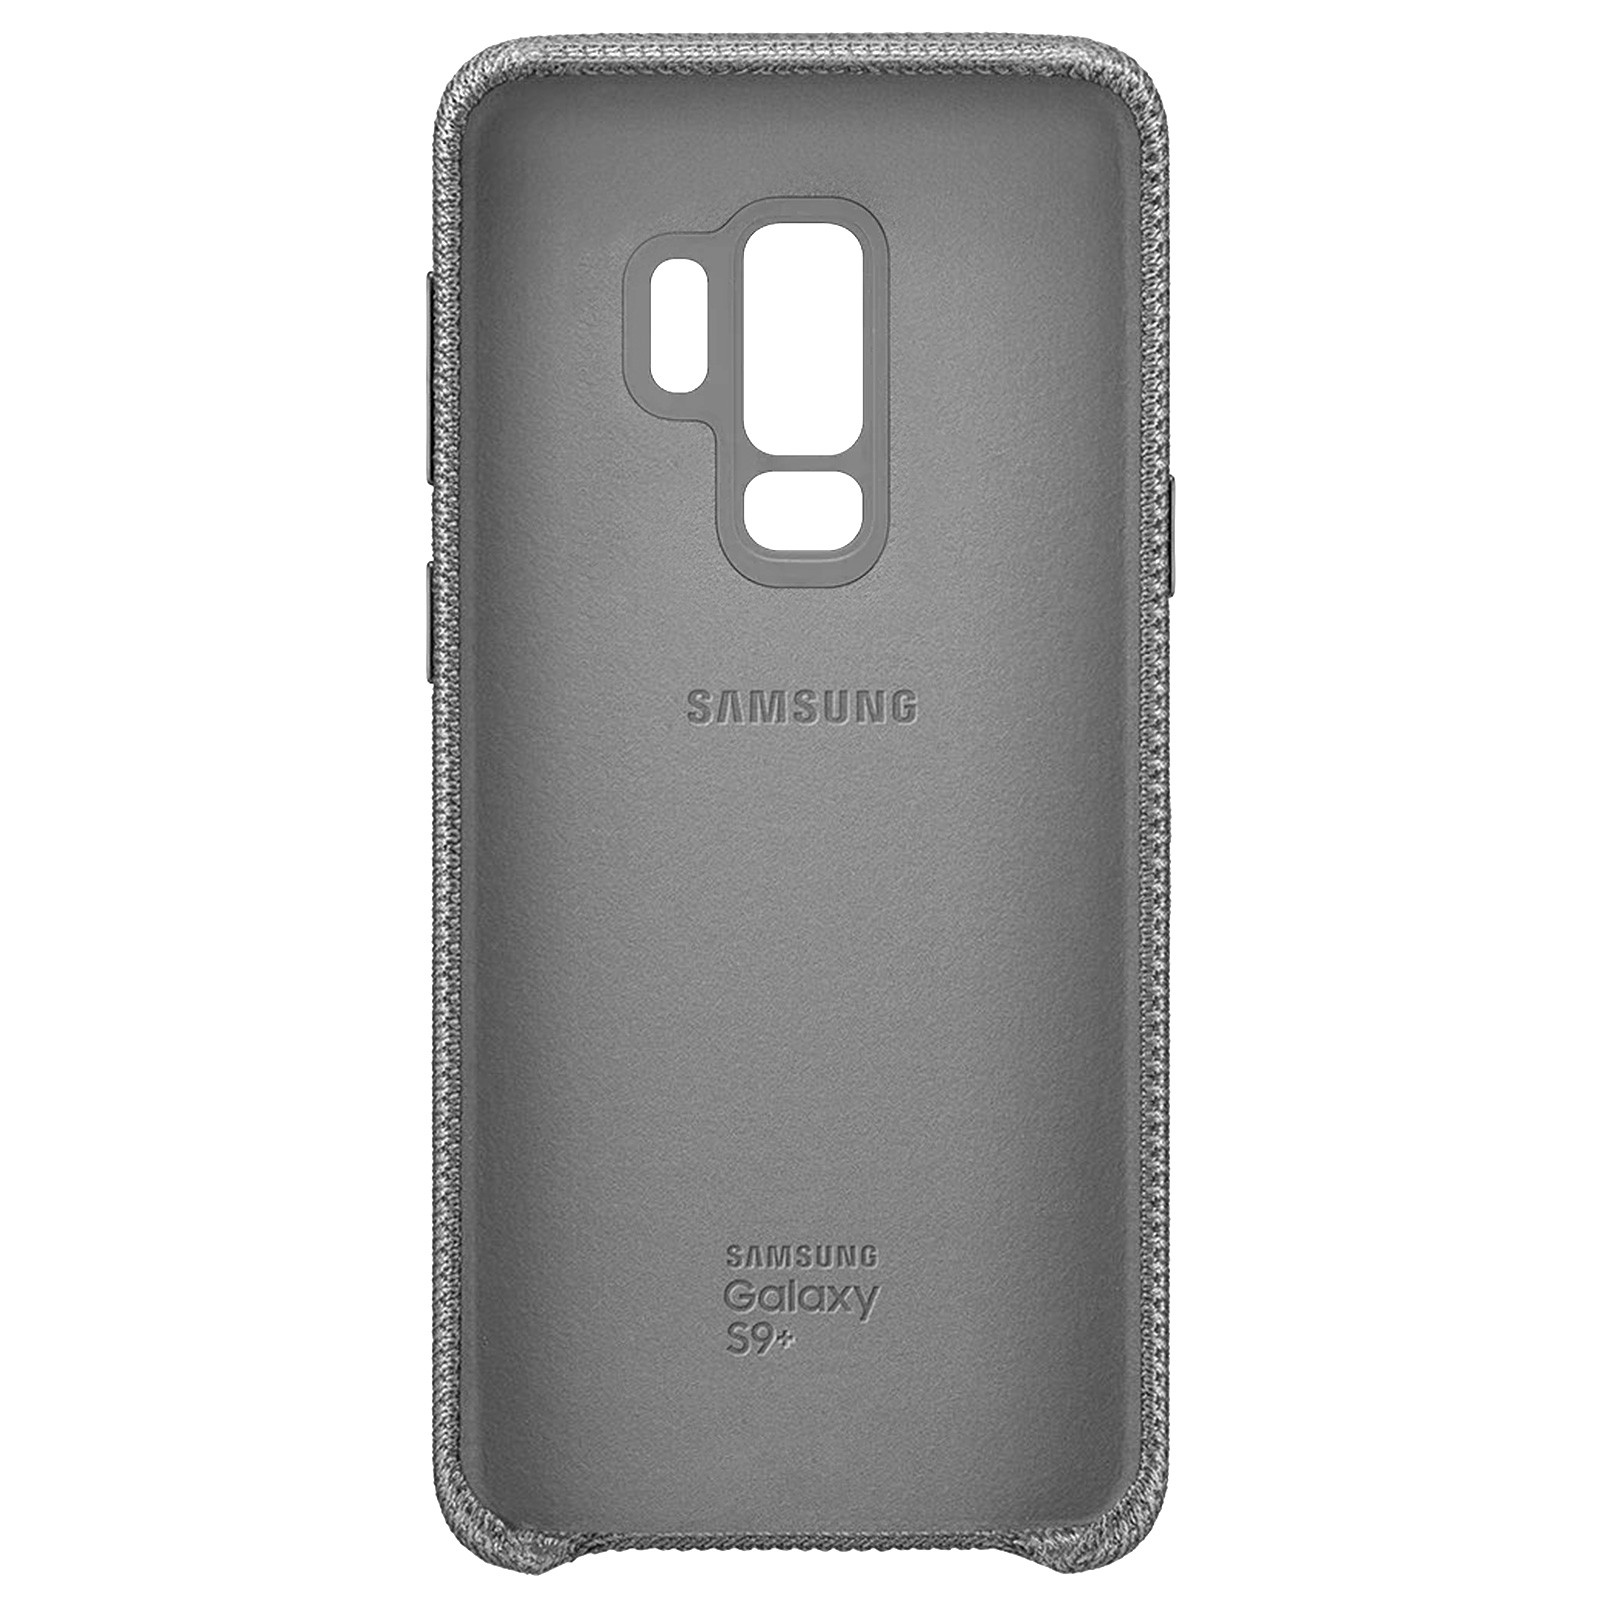 SAMSUNG EF-GG965FJ Series, S9 Galaxy Plus, Grau Samsung, Reisekoffer